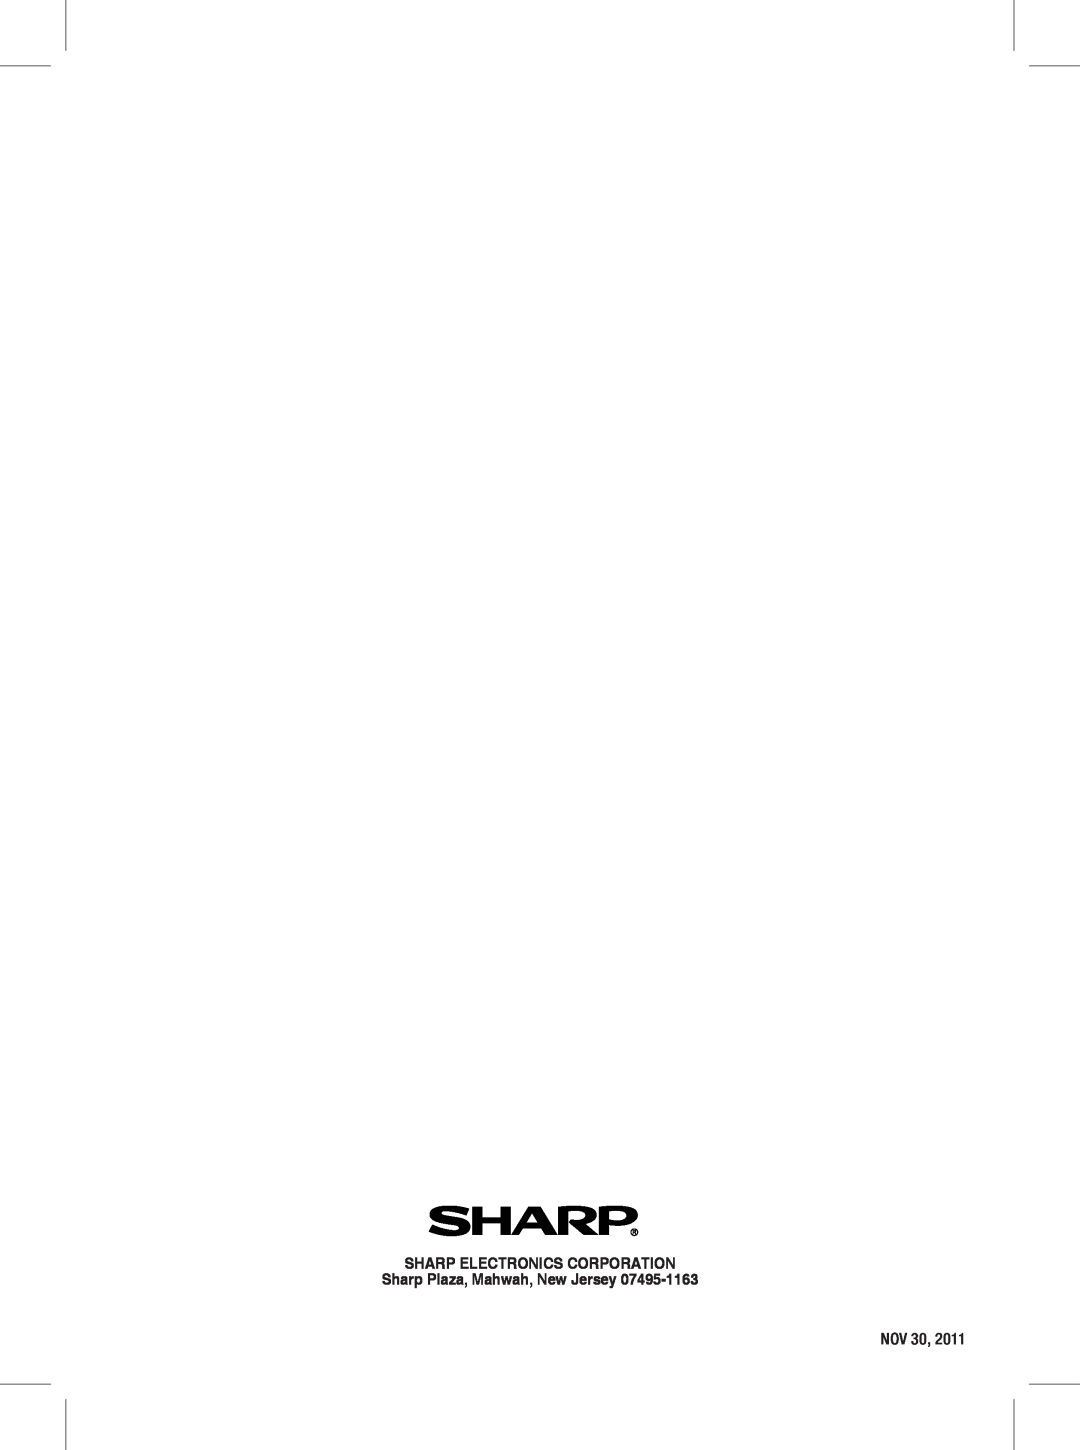 Sharp R-309YW, R-309YK, R-309YV warranty Sharp Electronics Corporation, Sharp Plaza, Mahwah, New Jersey, Nov 